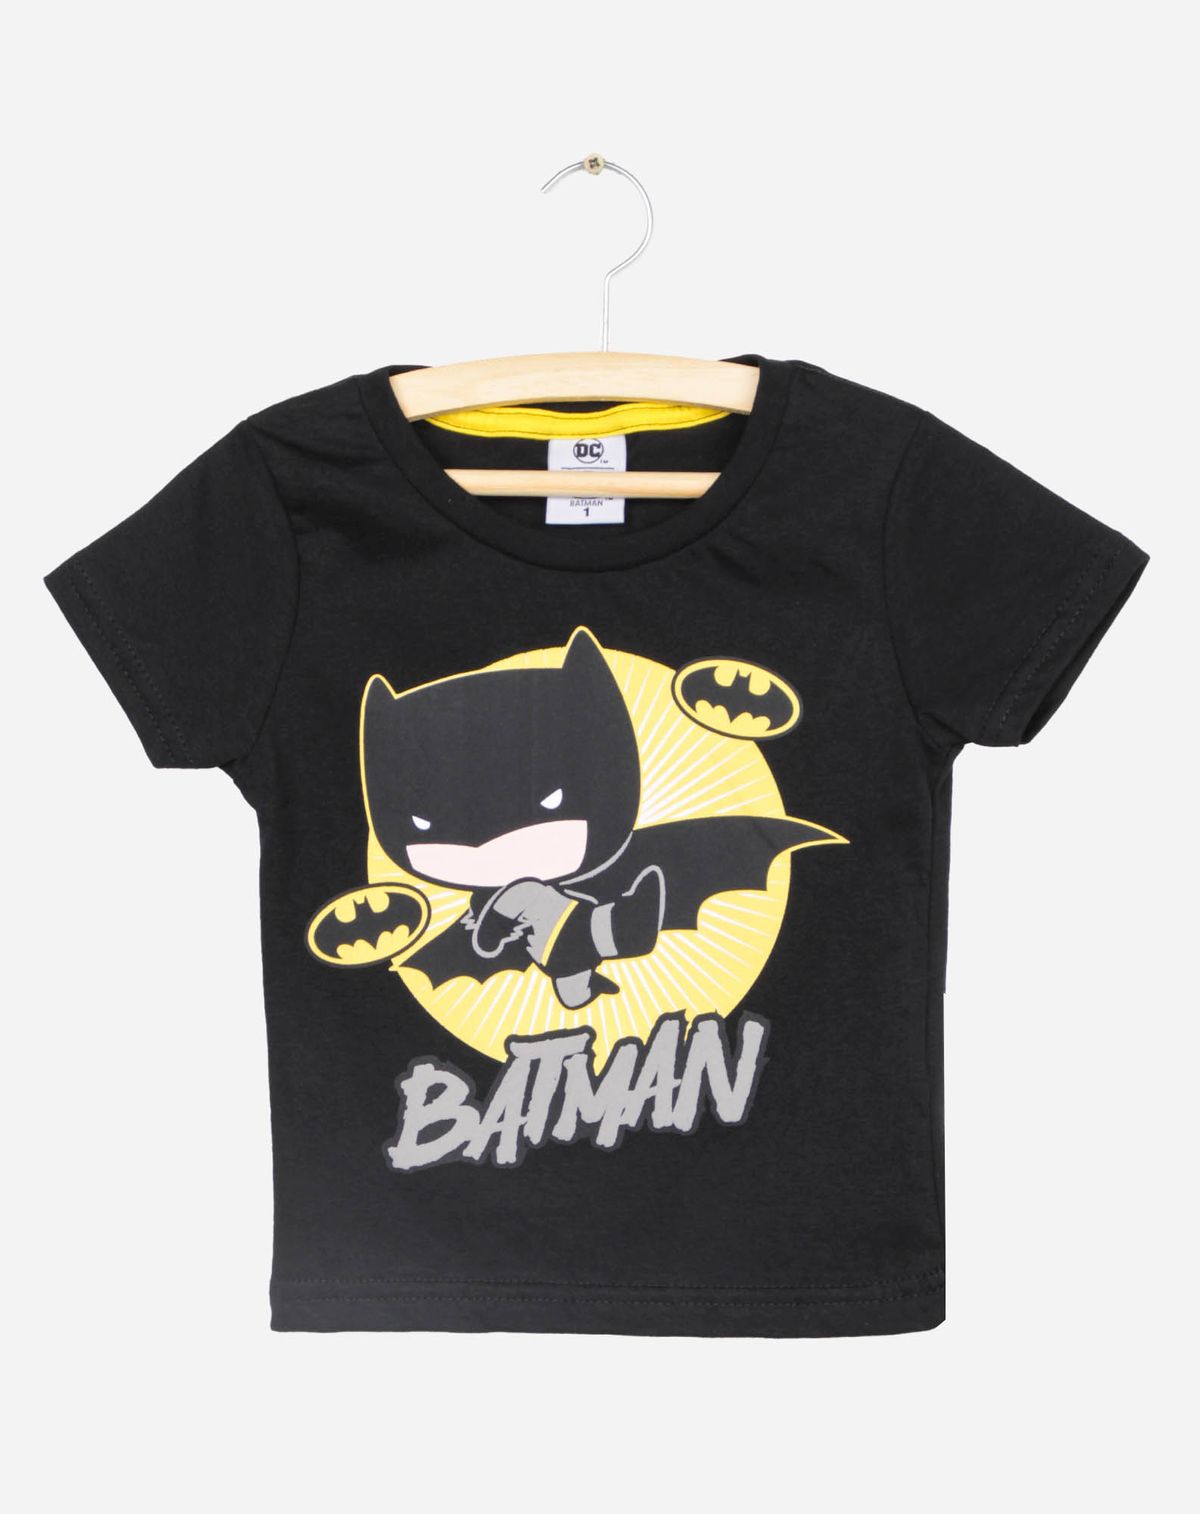 679498004-camiseta-manga-curta-infantil-menino-heroi-batman-lojas-besni---tam.-01-a-03-anos-preto-1-f28